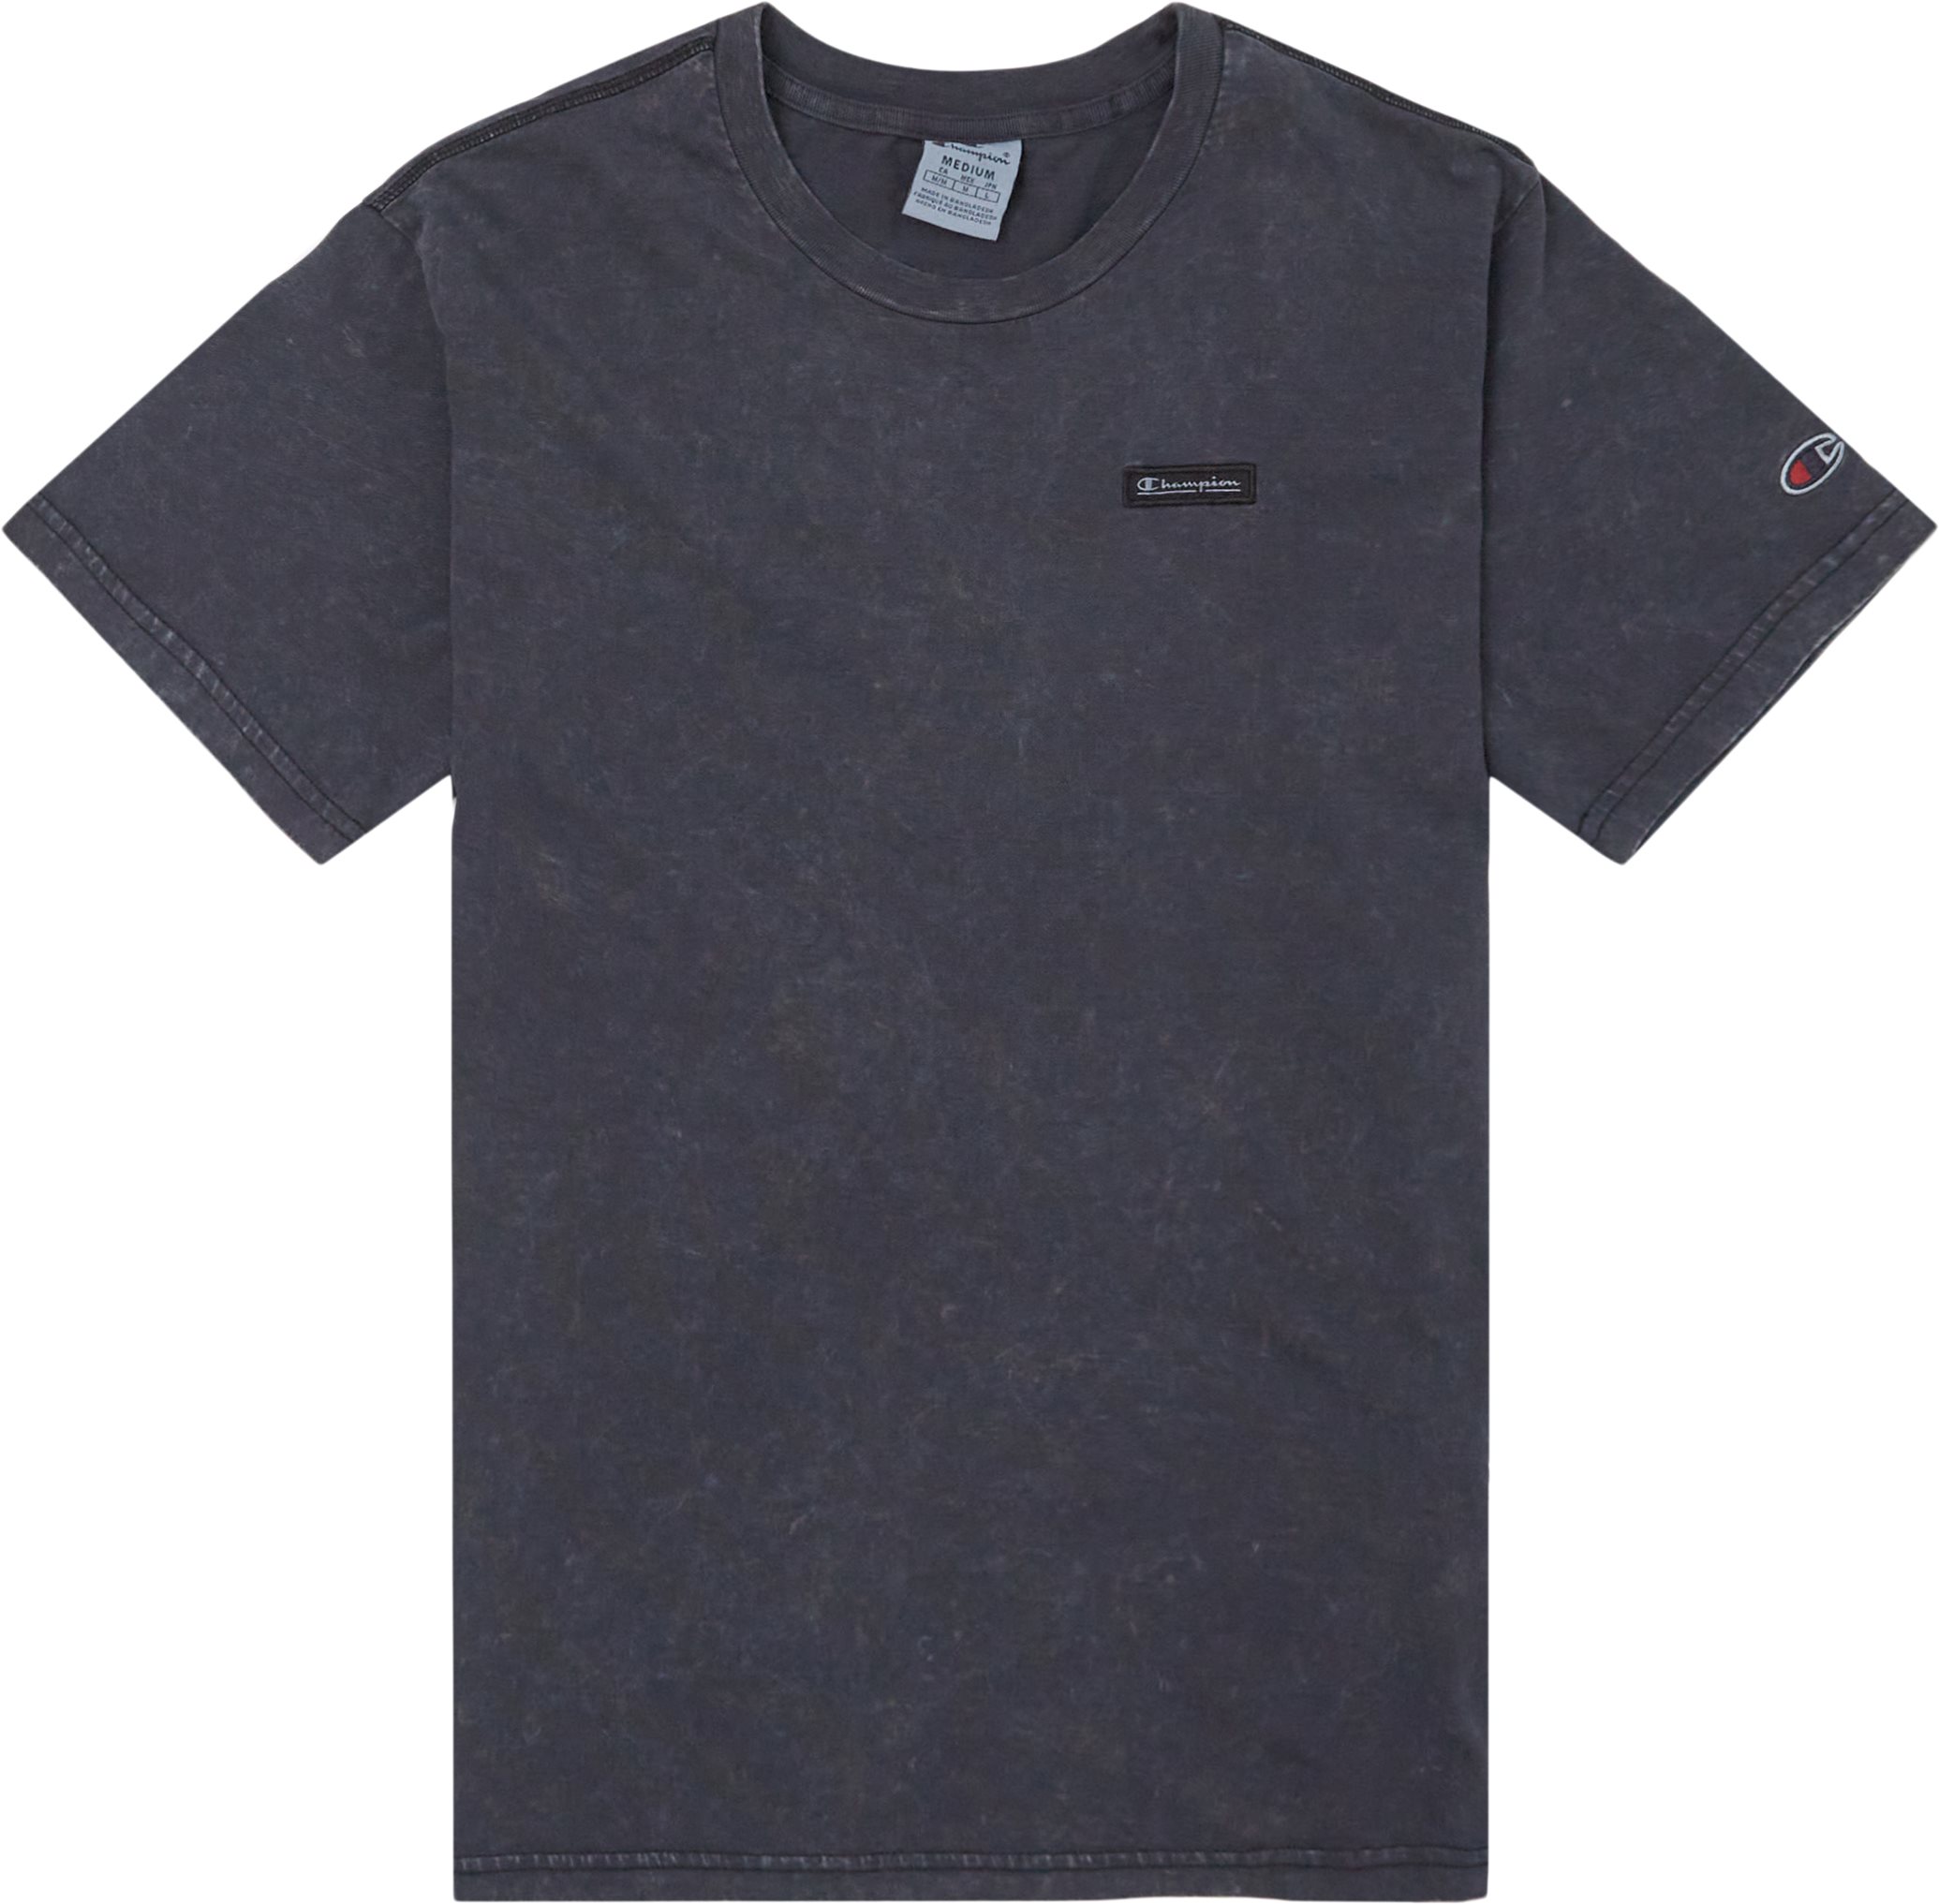 Crewneck Tee - T-shirts - Regular fit - Black